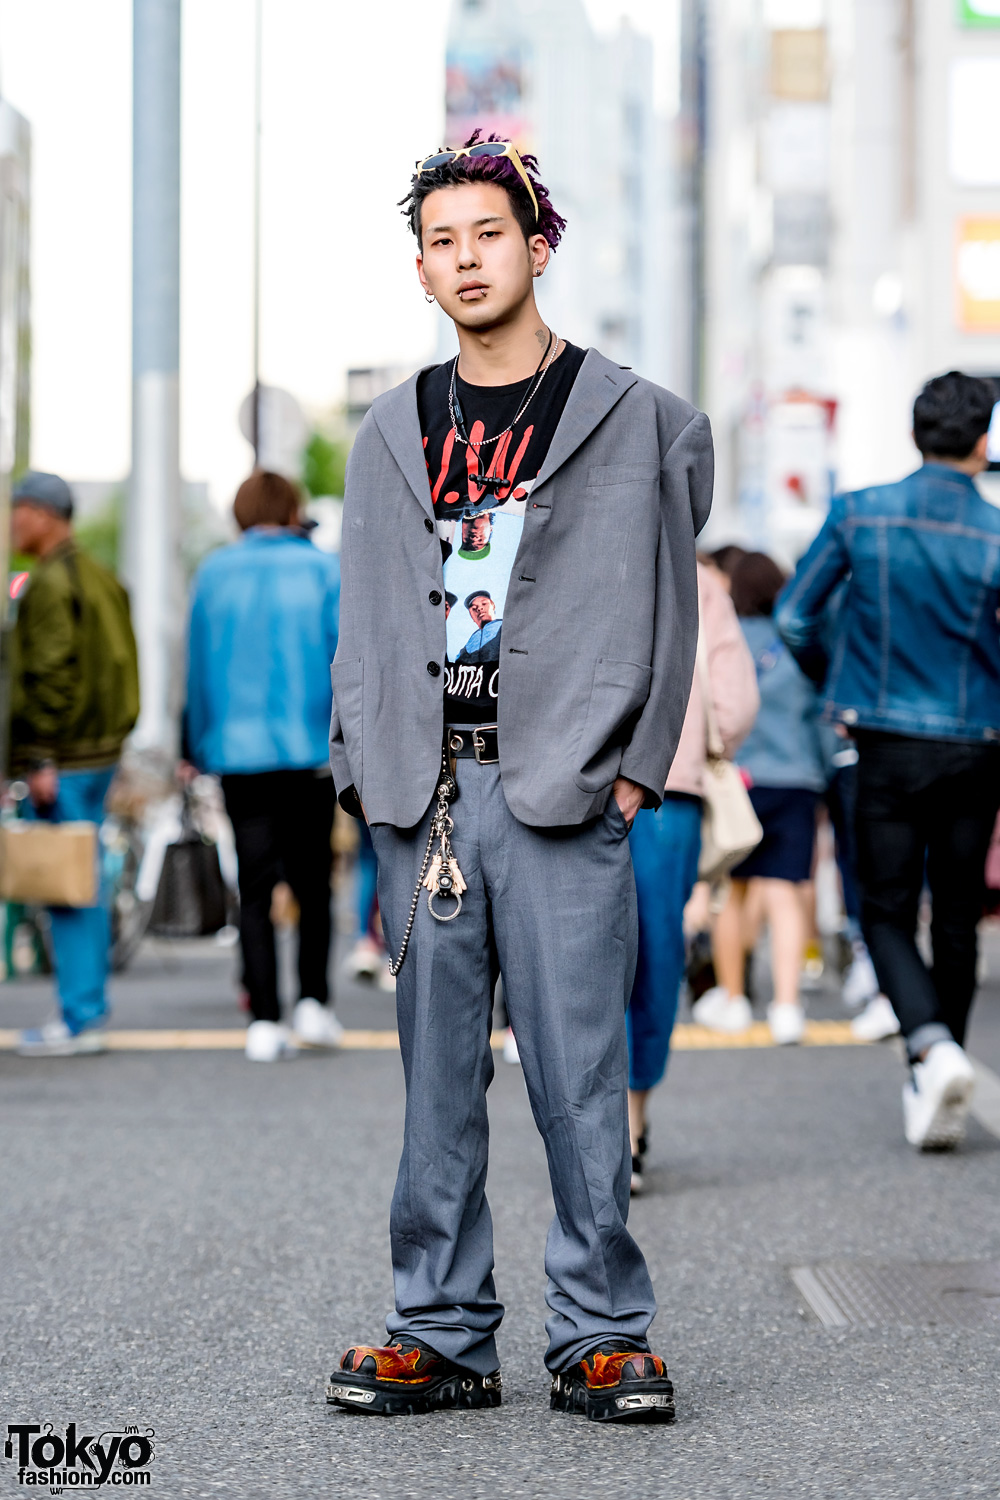 Kinji Staffer in Dreadlocks & Menswear Street Style w/ Kansai Yamamoto Suit & New Rock Flame Boots